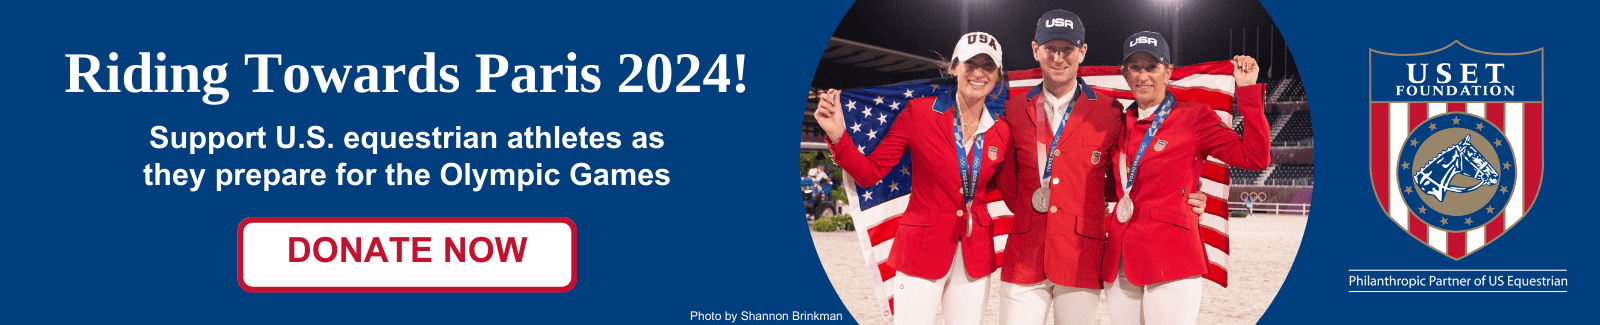 Paris 2024 Olympic Games U.S. Equestrian